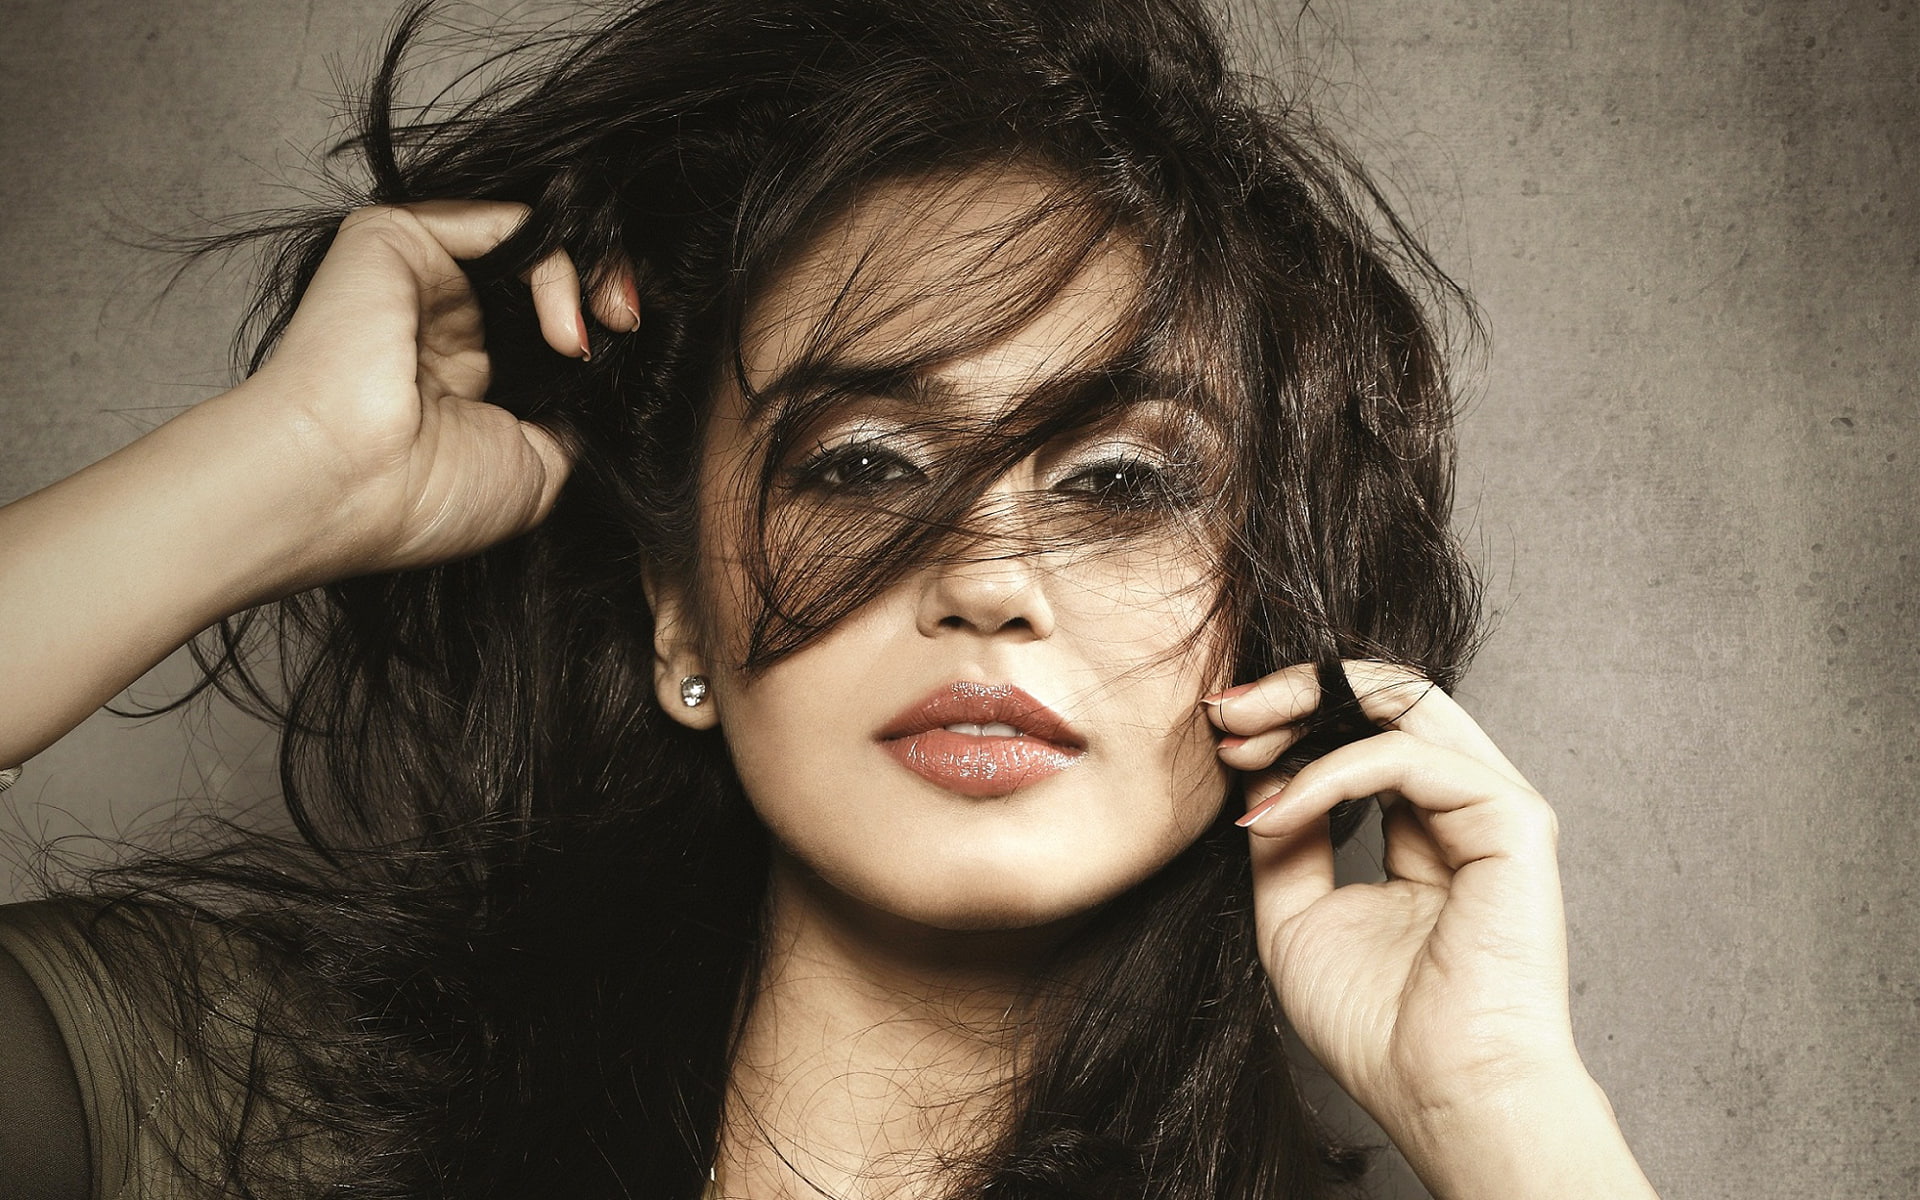 Huma Qureshi Messy Hair Close Up  Photoshoot, headshot, portrait